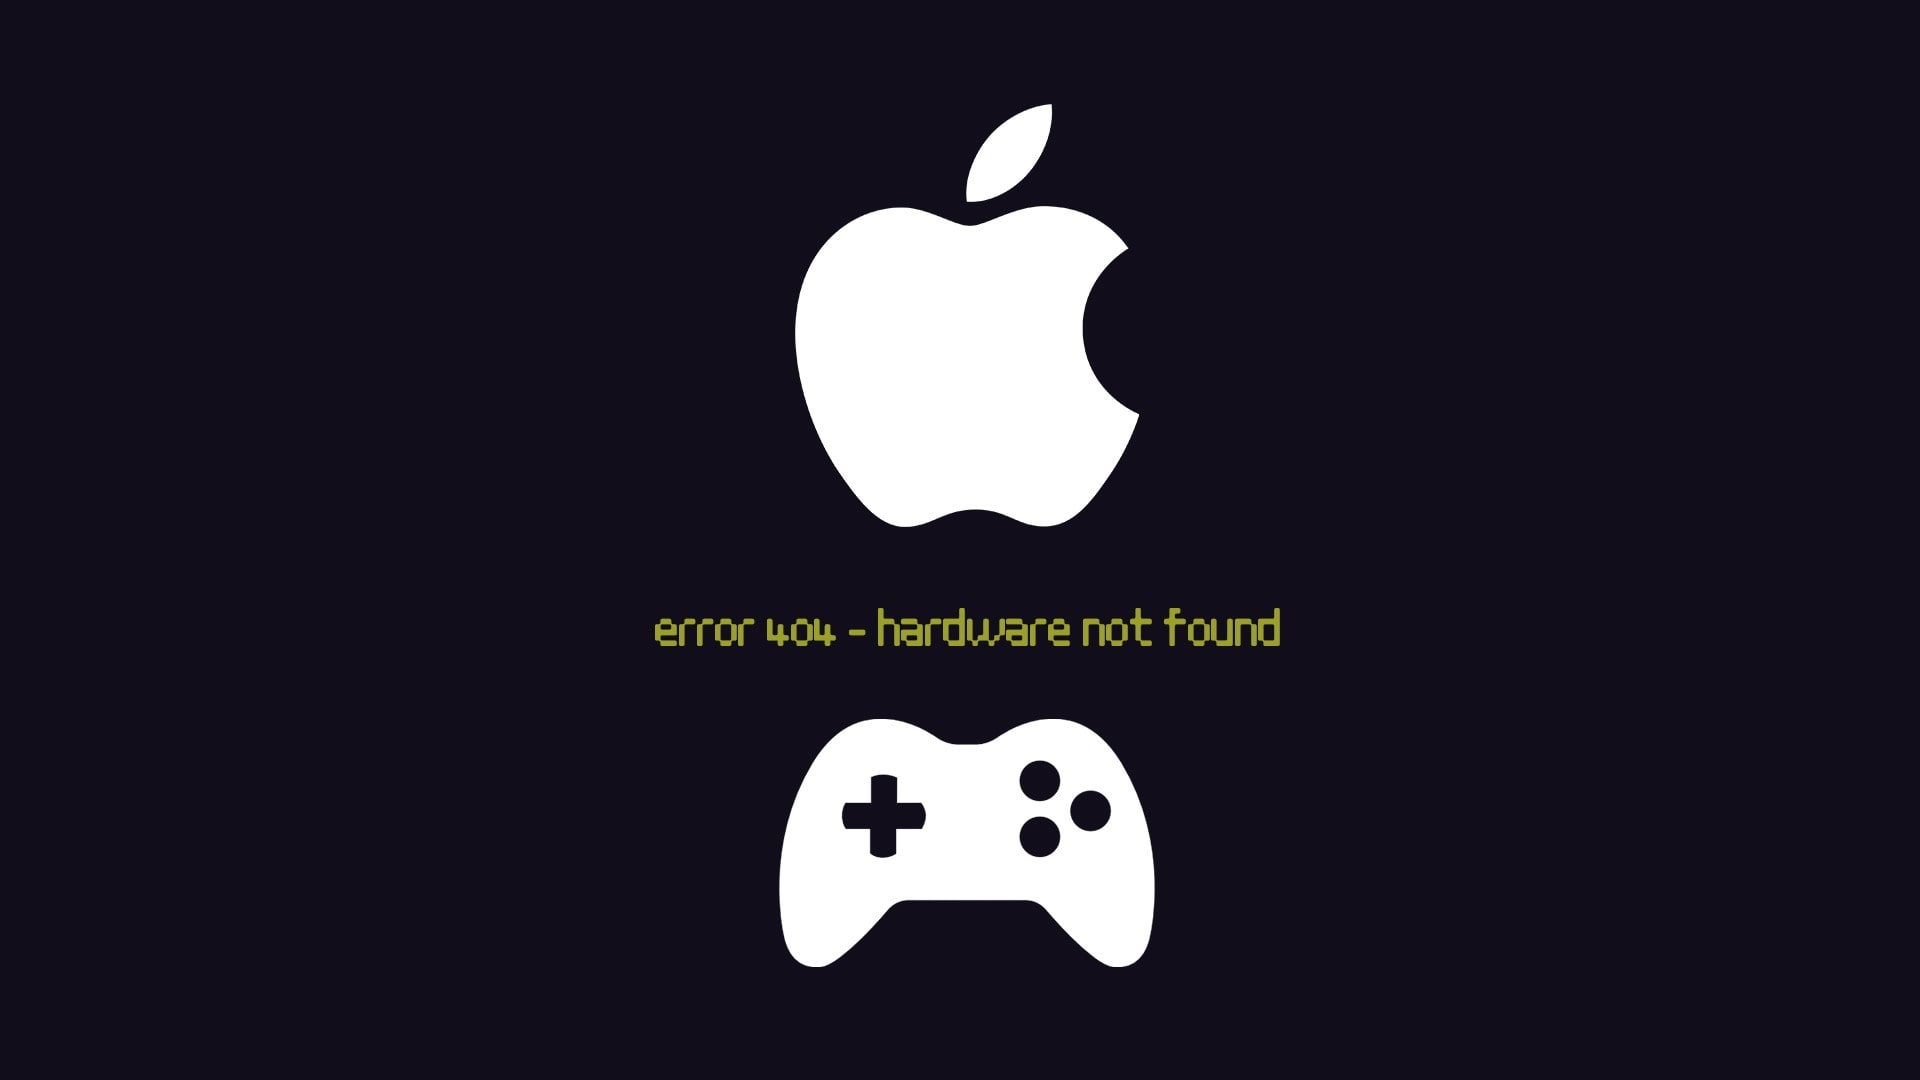 mac book imac itech hardware apple vs microsoft apple inc_ video games pc gaming